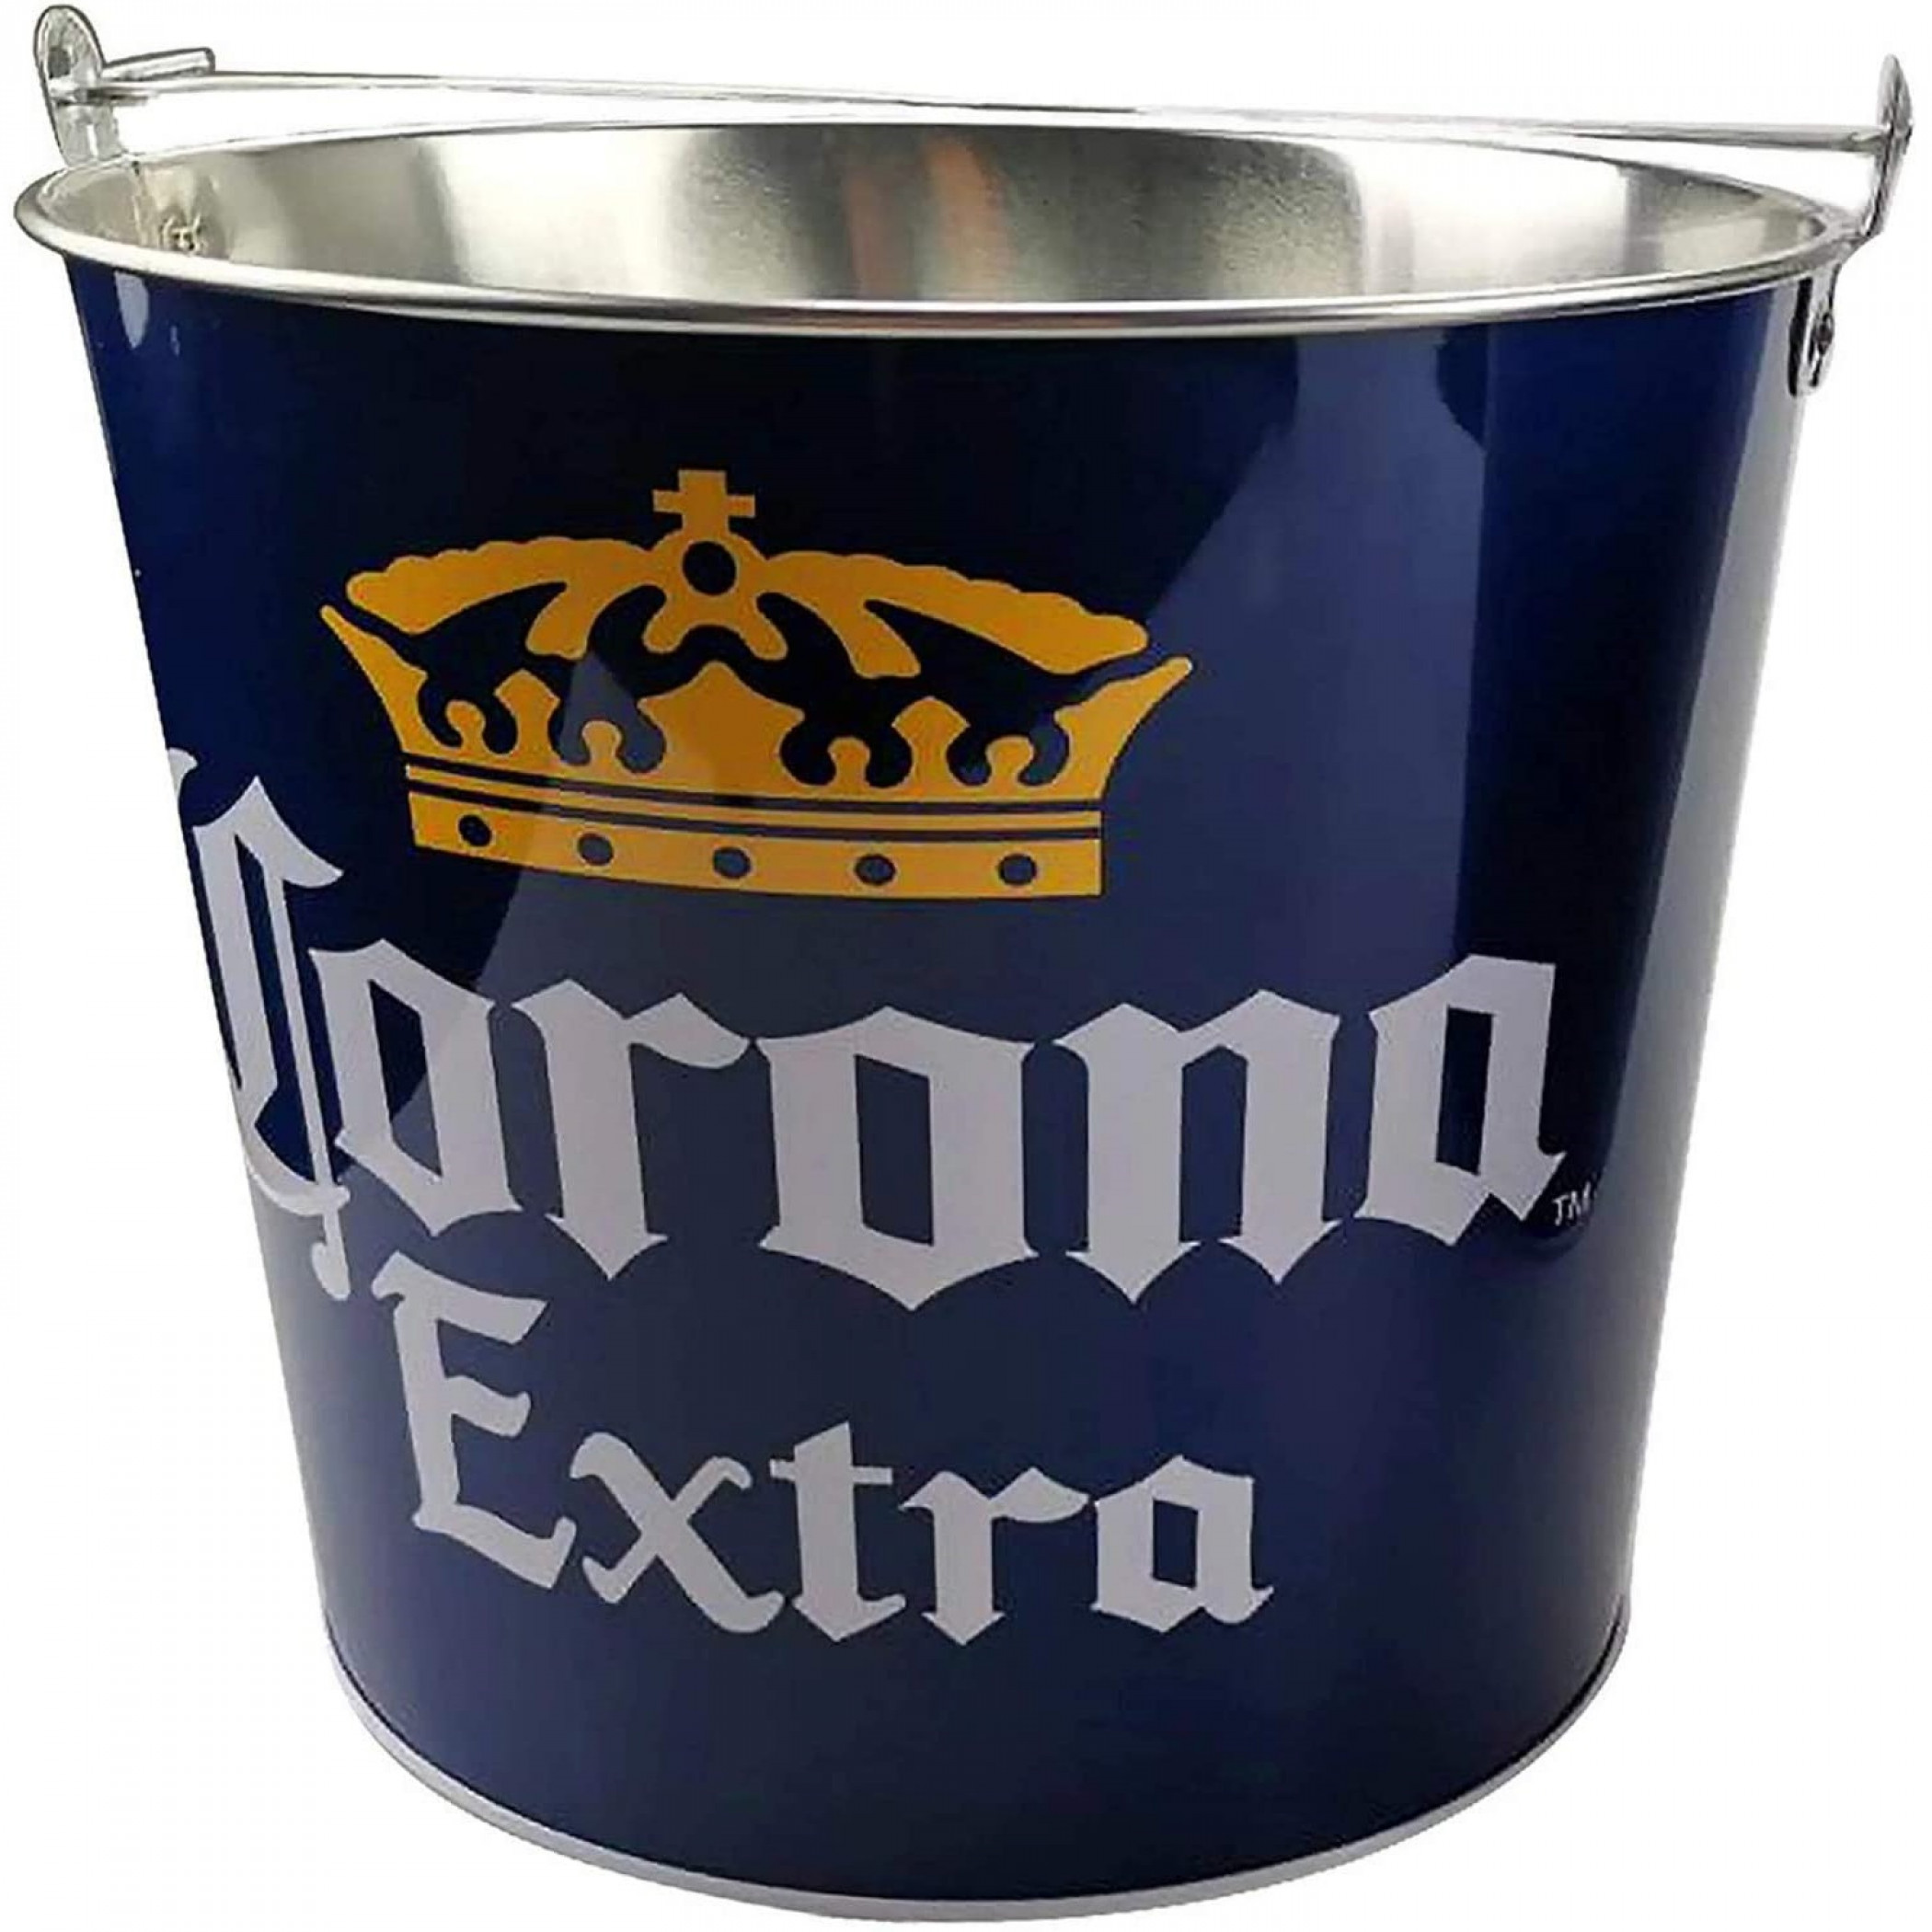 Corona Extra Blue Beer Bucket